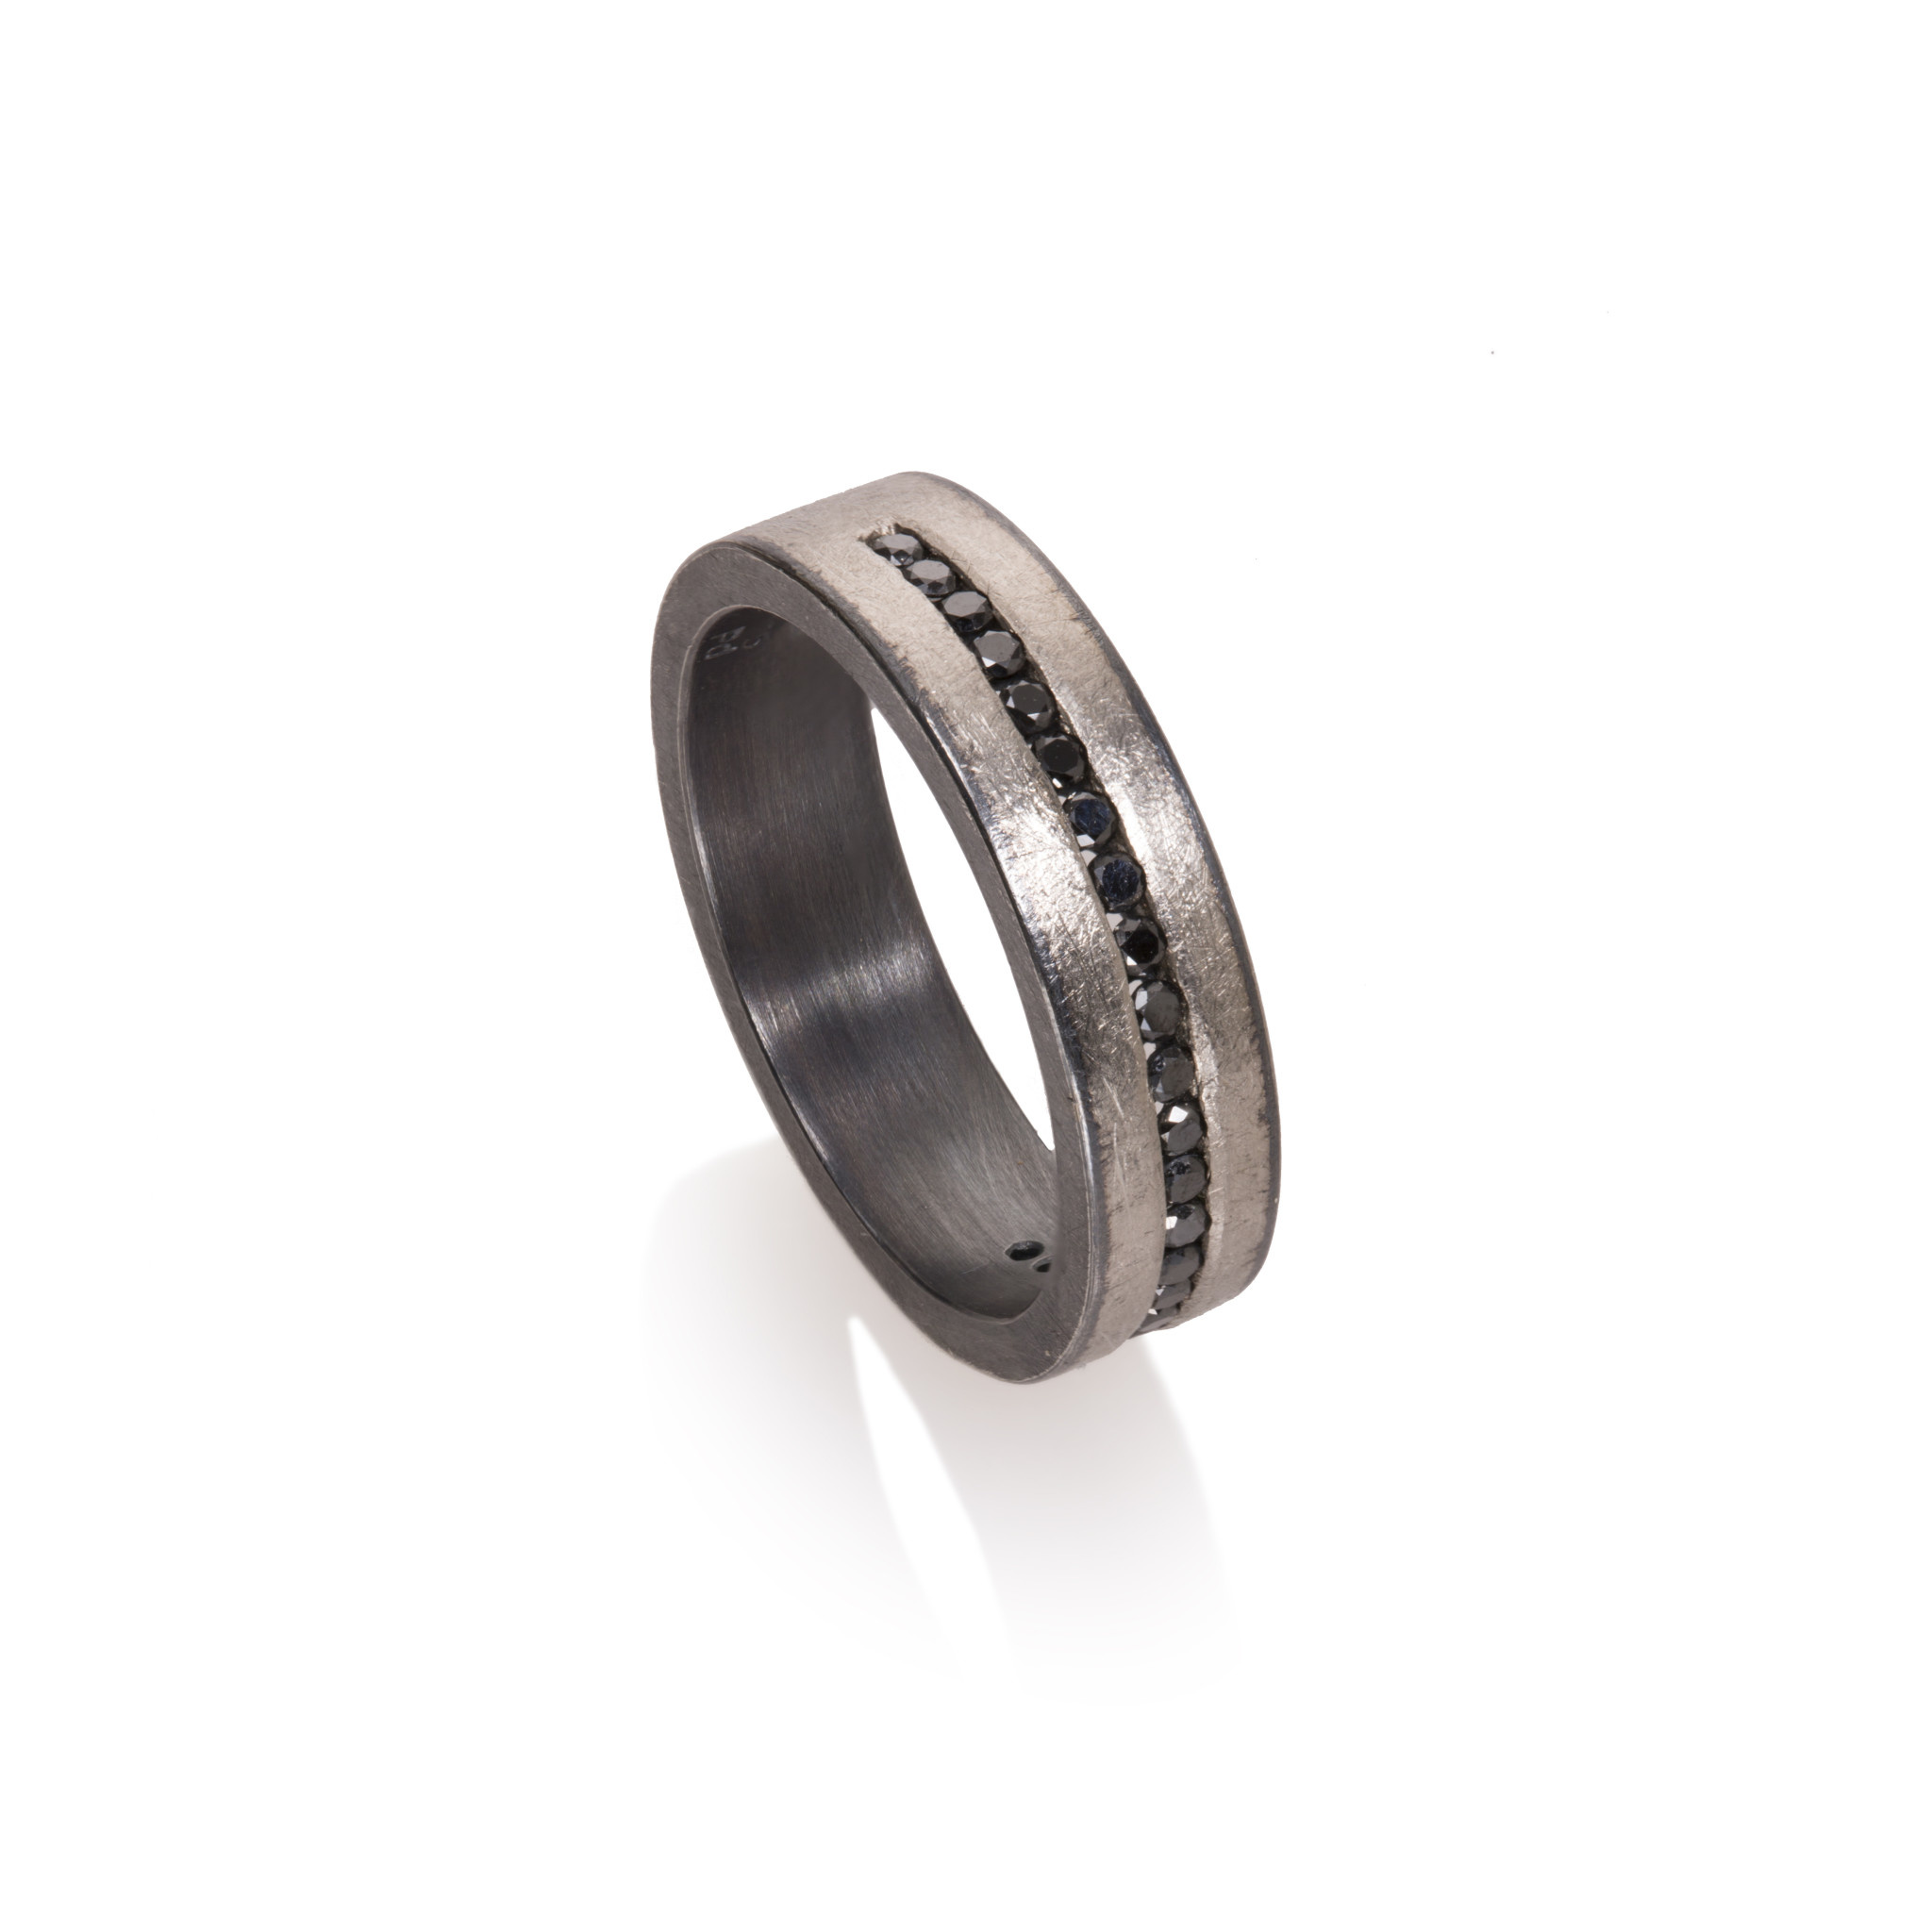 Flat Palladium Wedding Band by Benchmark - Palladium Ring with Coin Edge